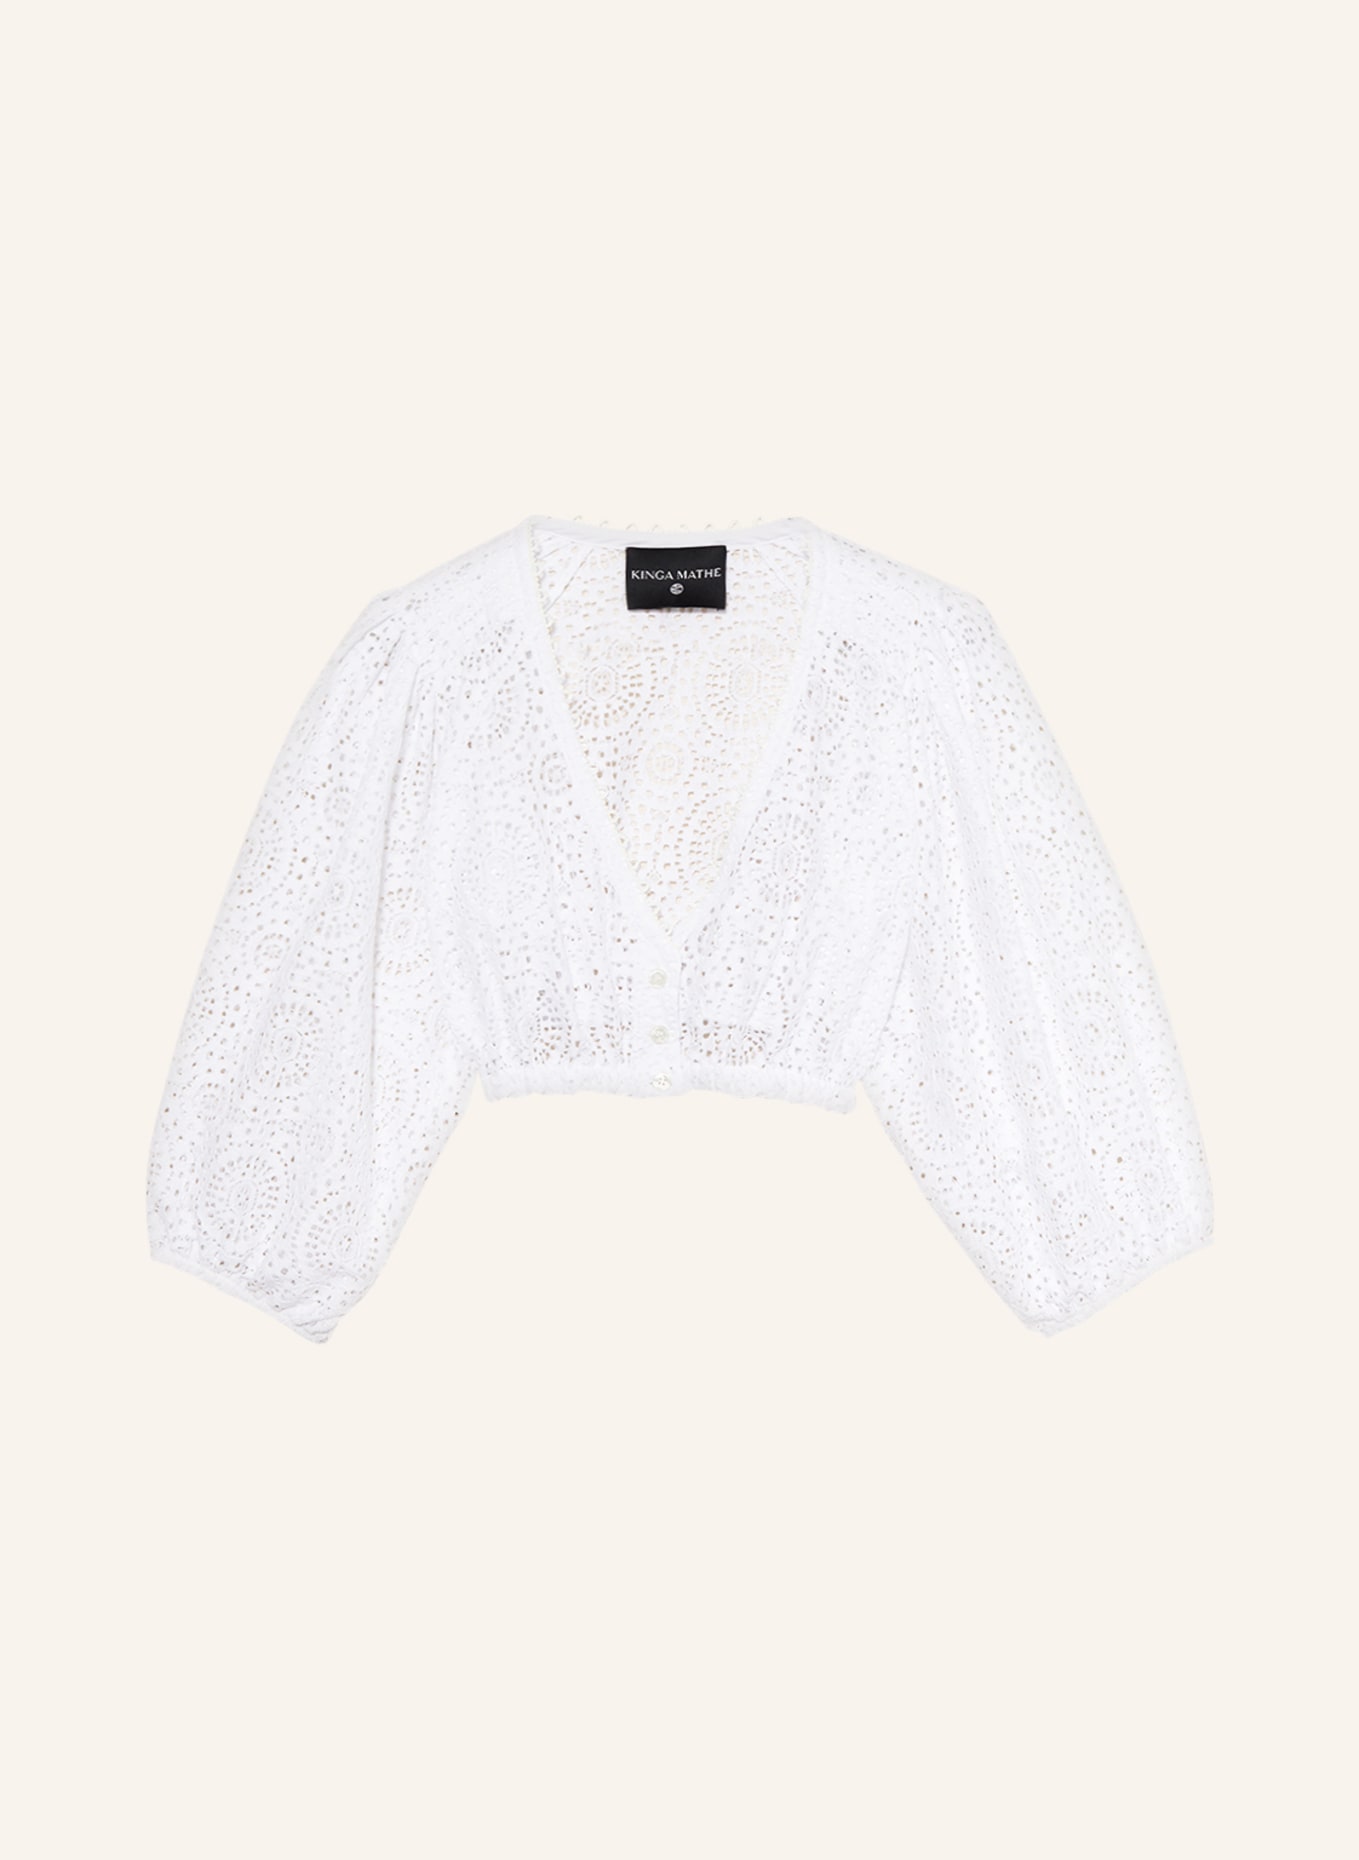 KINGA MATHE Dirndl blouse KIRA in crochet lace, Color: WHITE (Image 1)